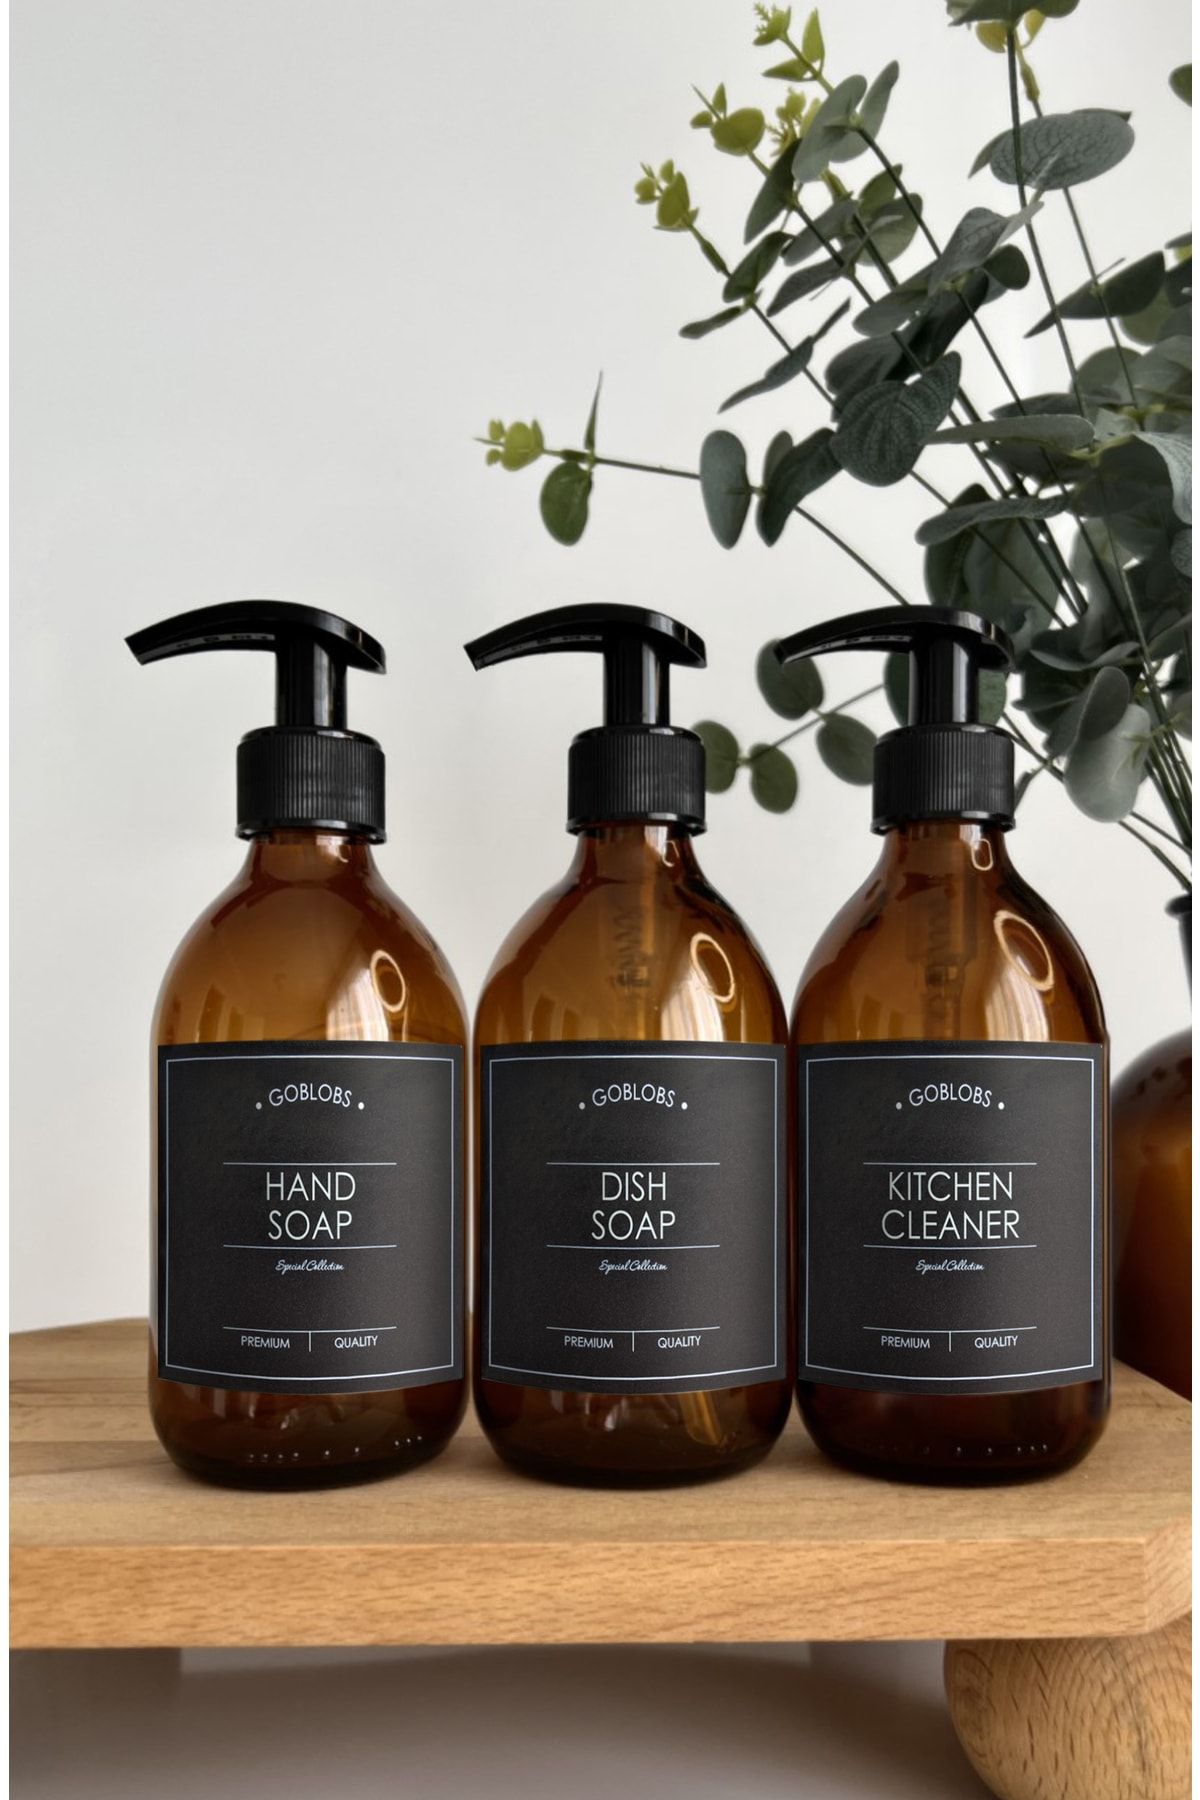 GO BLOBS 3'lü Set 300ml Amber Şişe Hand Soap & Dısh Soap & Kitchen Cleaner Siyah